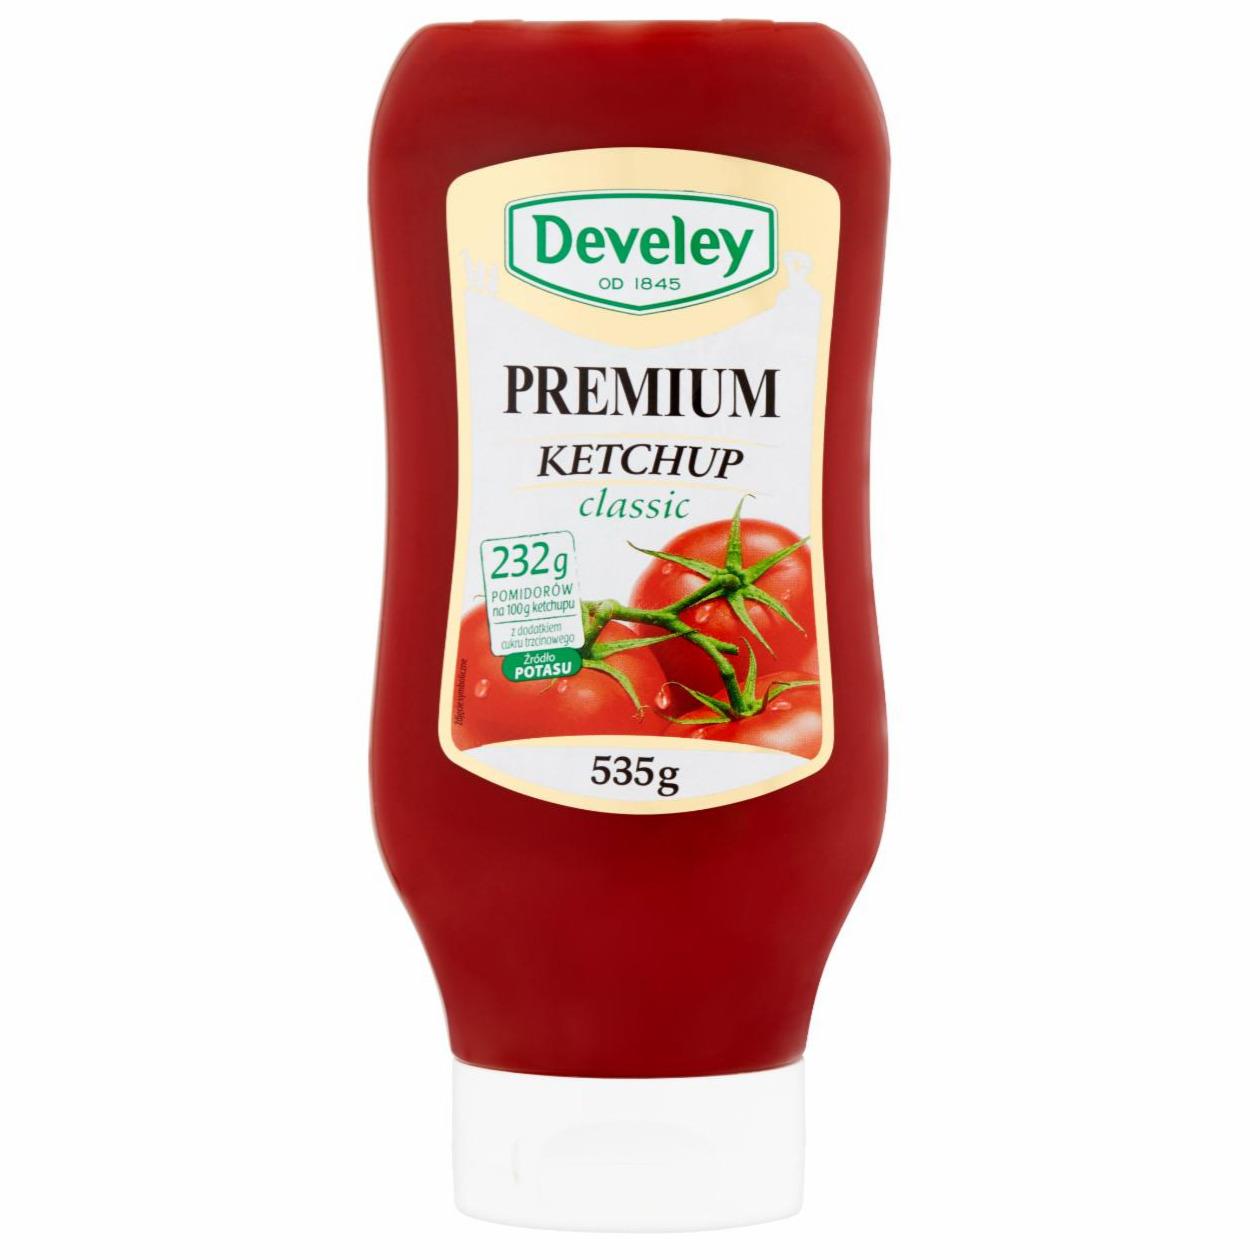 Zdjęcia - Develey Ketchup Premium classic 535 g